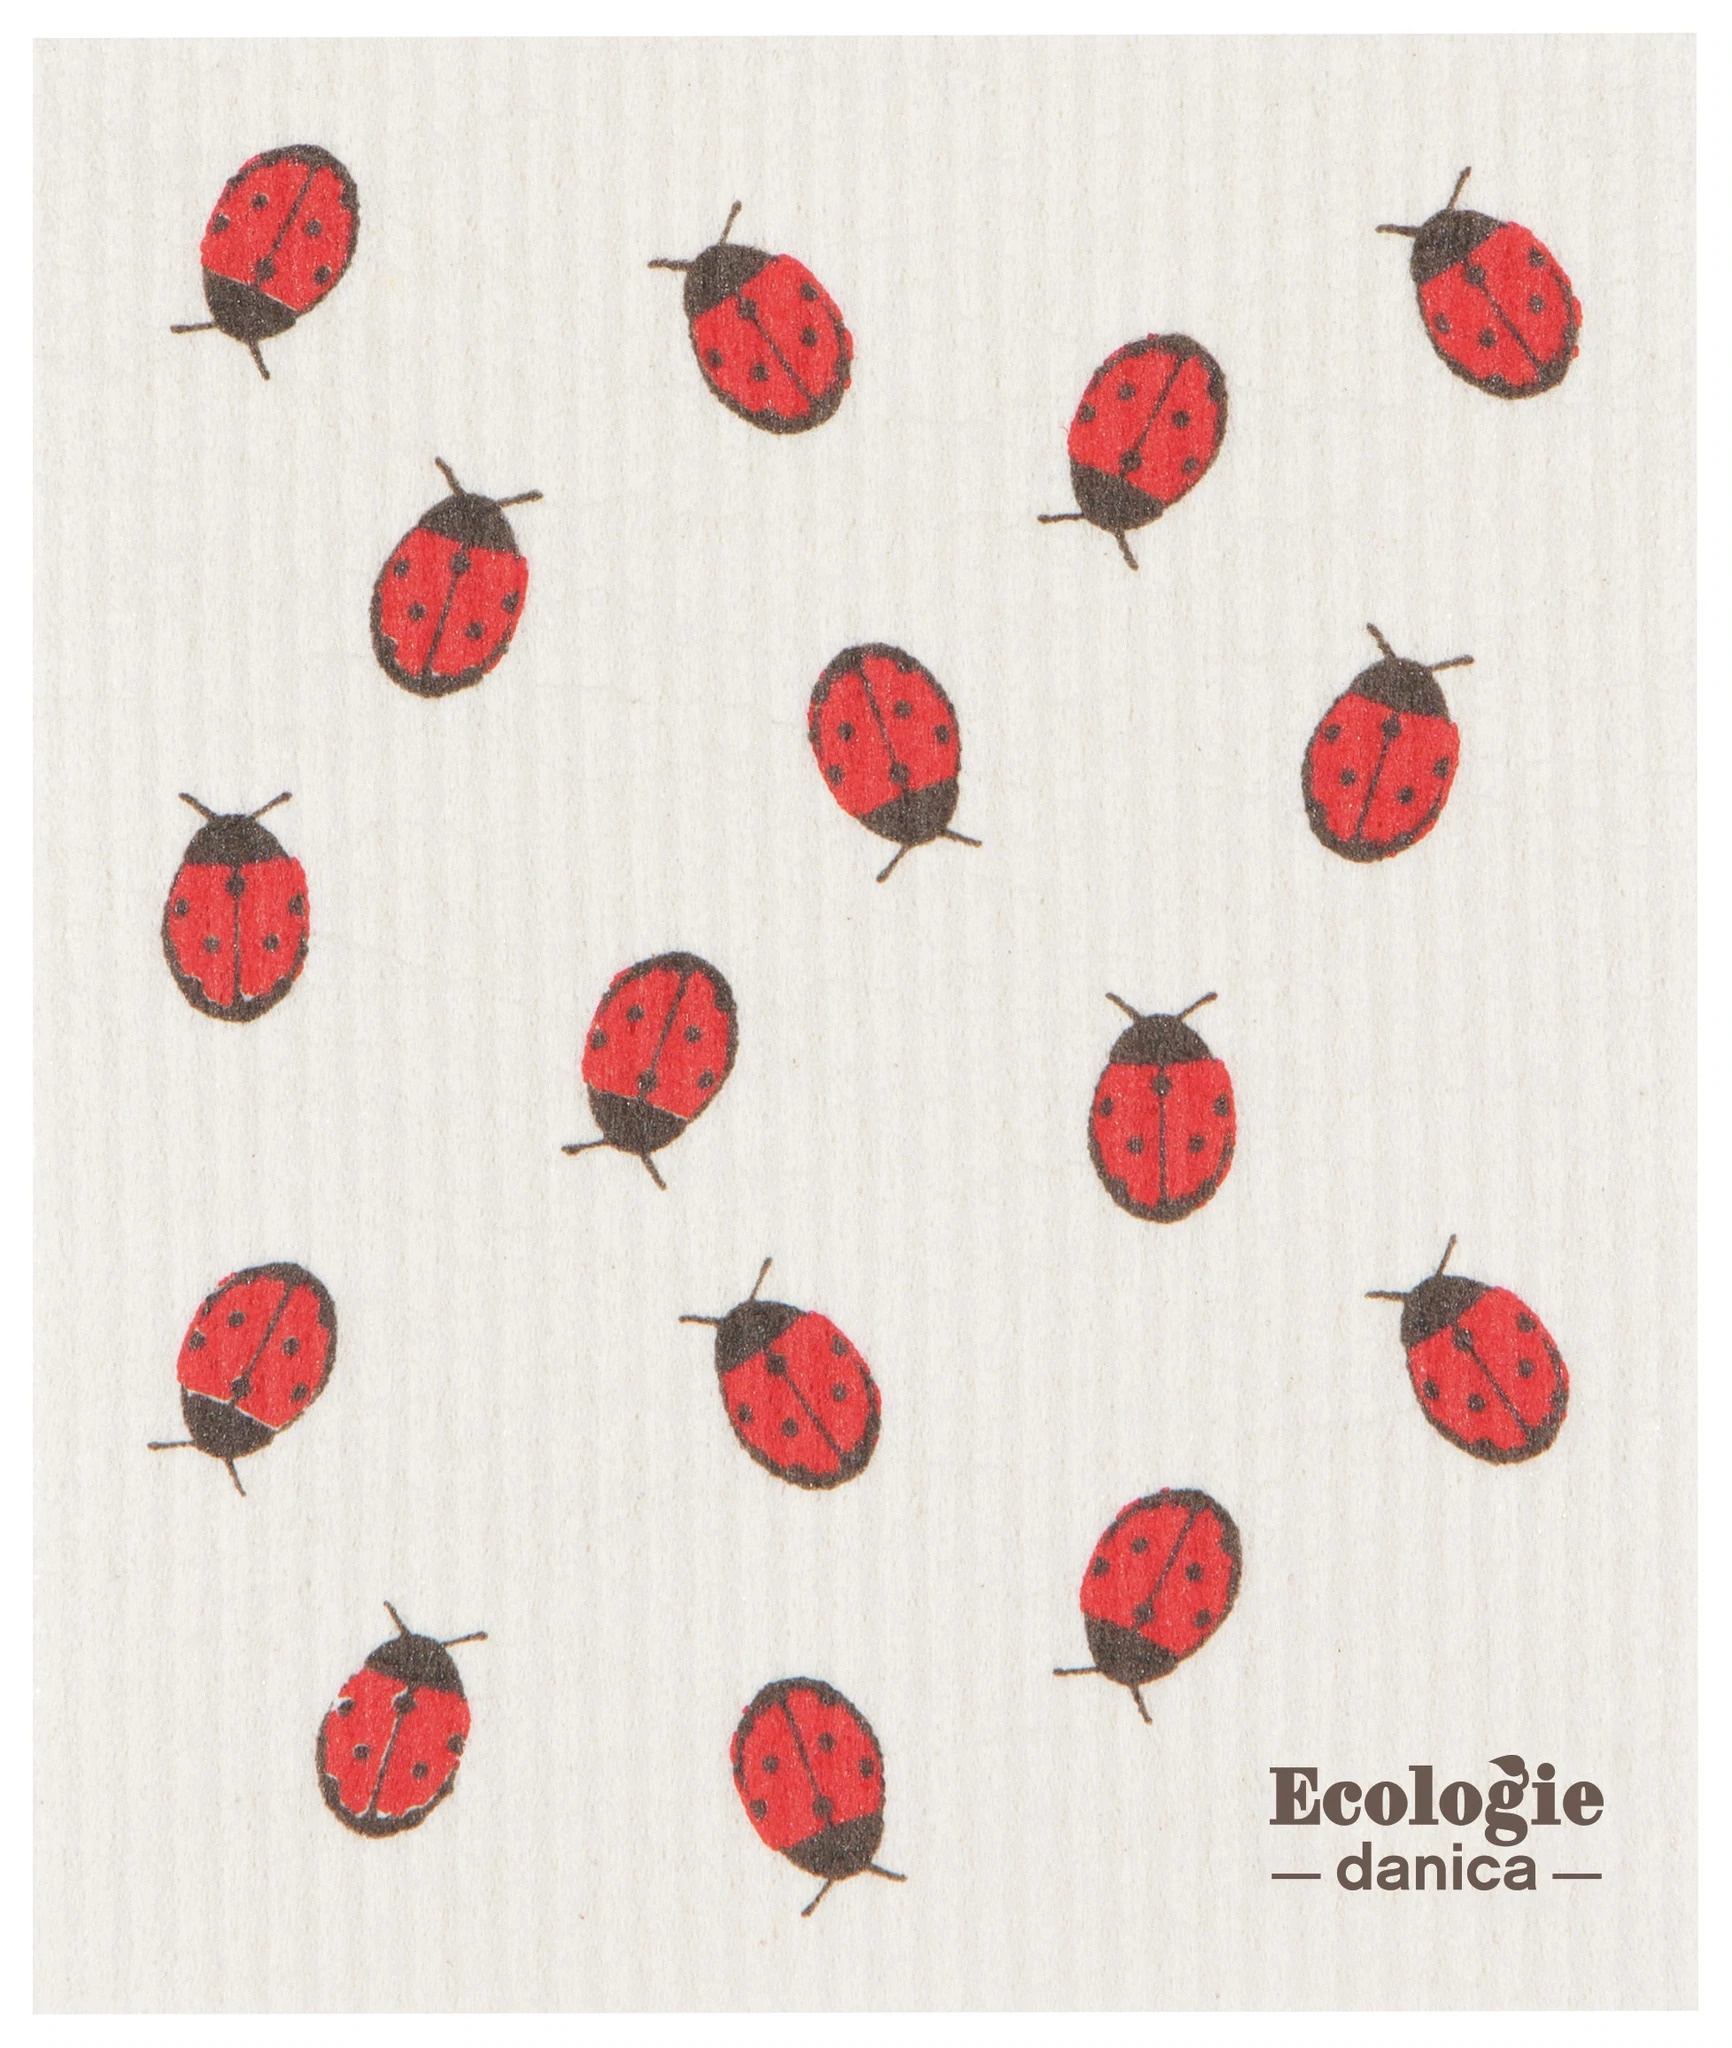 Ecologie Swedish Dishcloth - Fly Away Ladybug